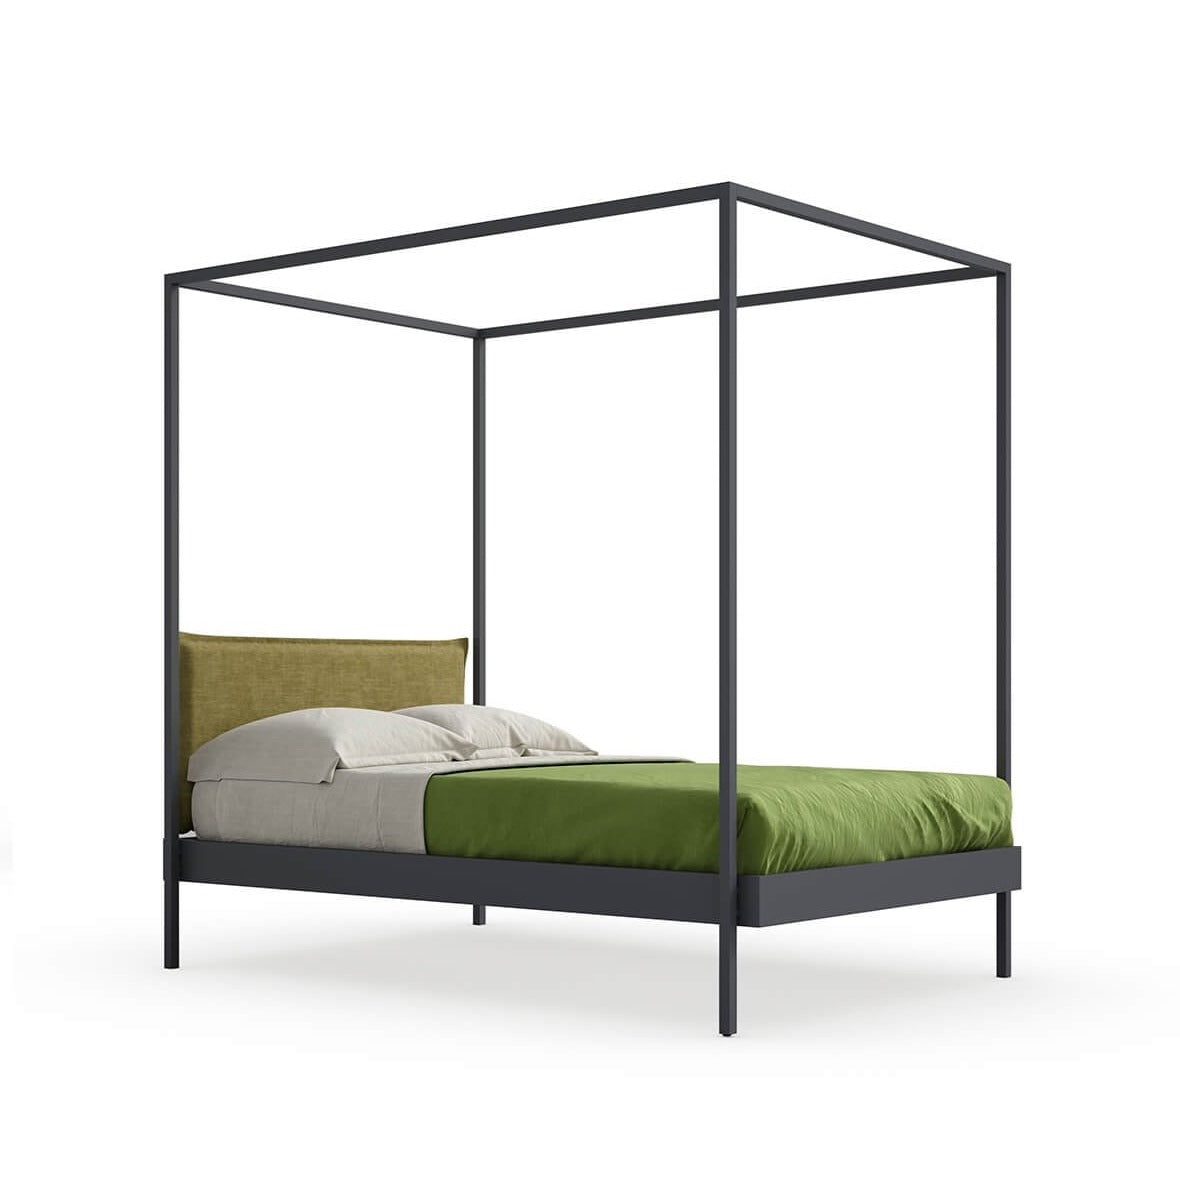 Grey ‘Kap’ Children’s Canopy bed by Nidi design